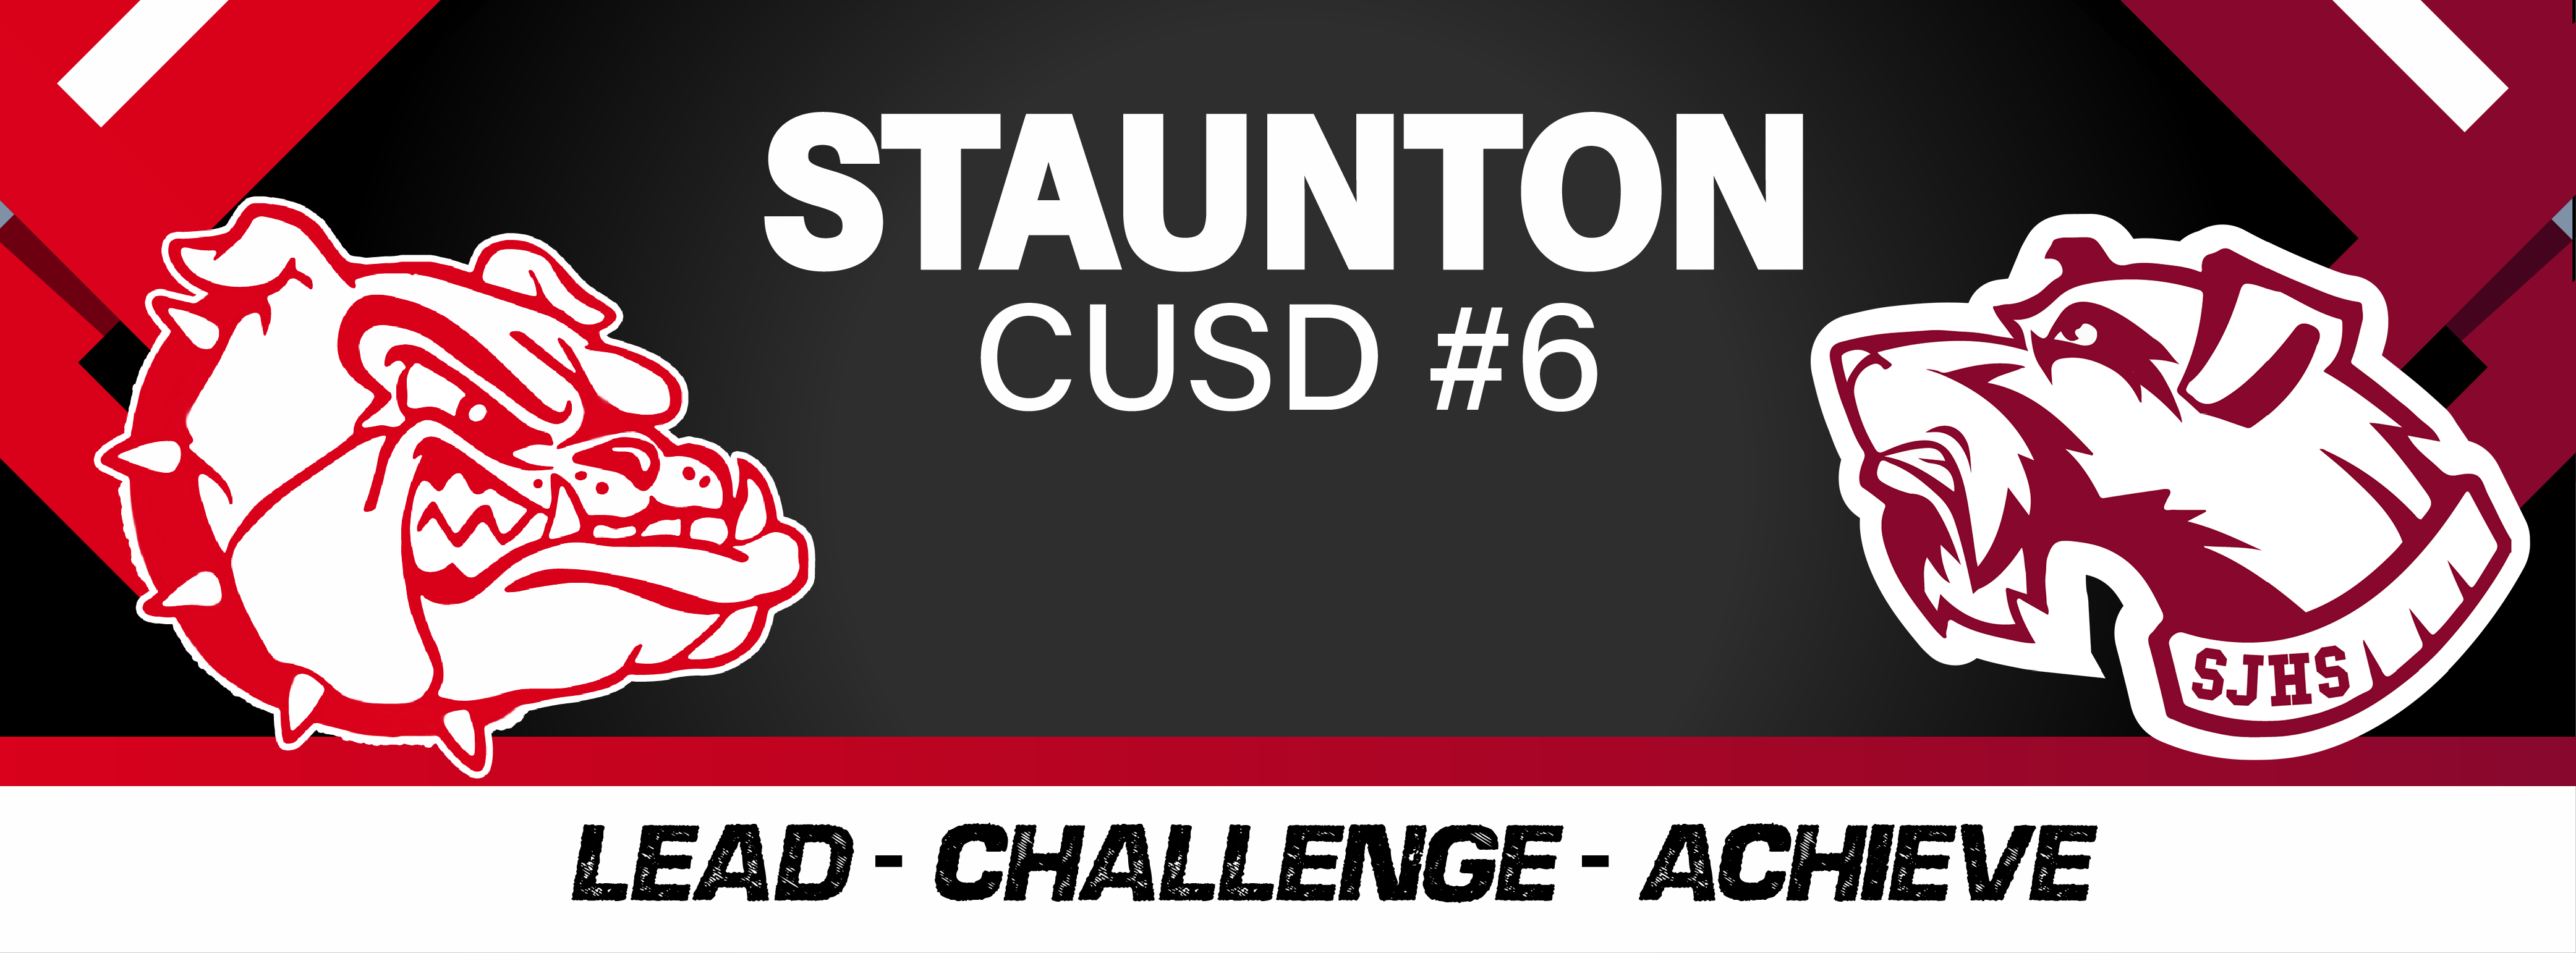 Staunton CUSD 6 Lead challenge acheive